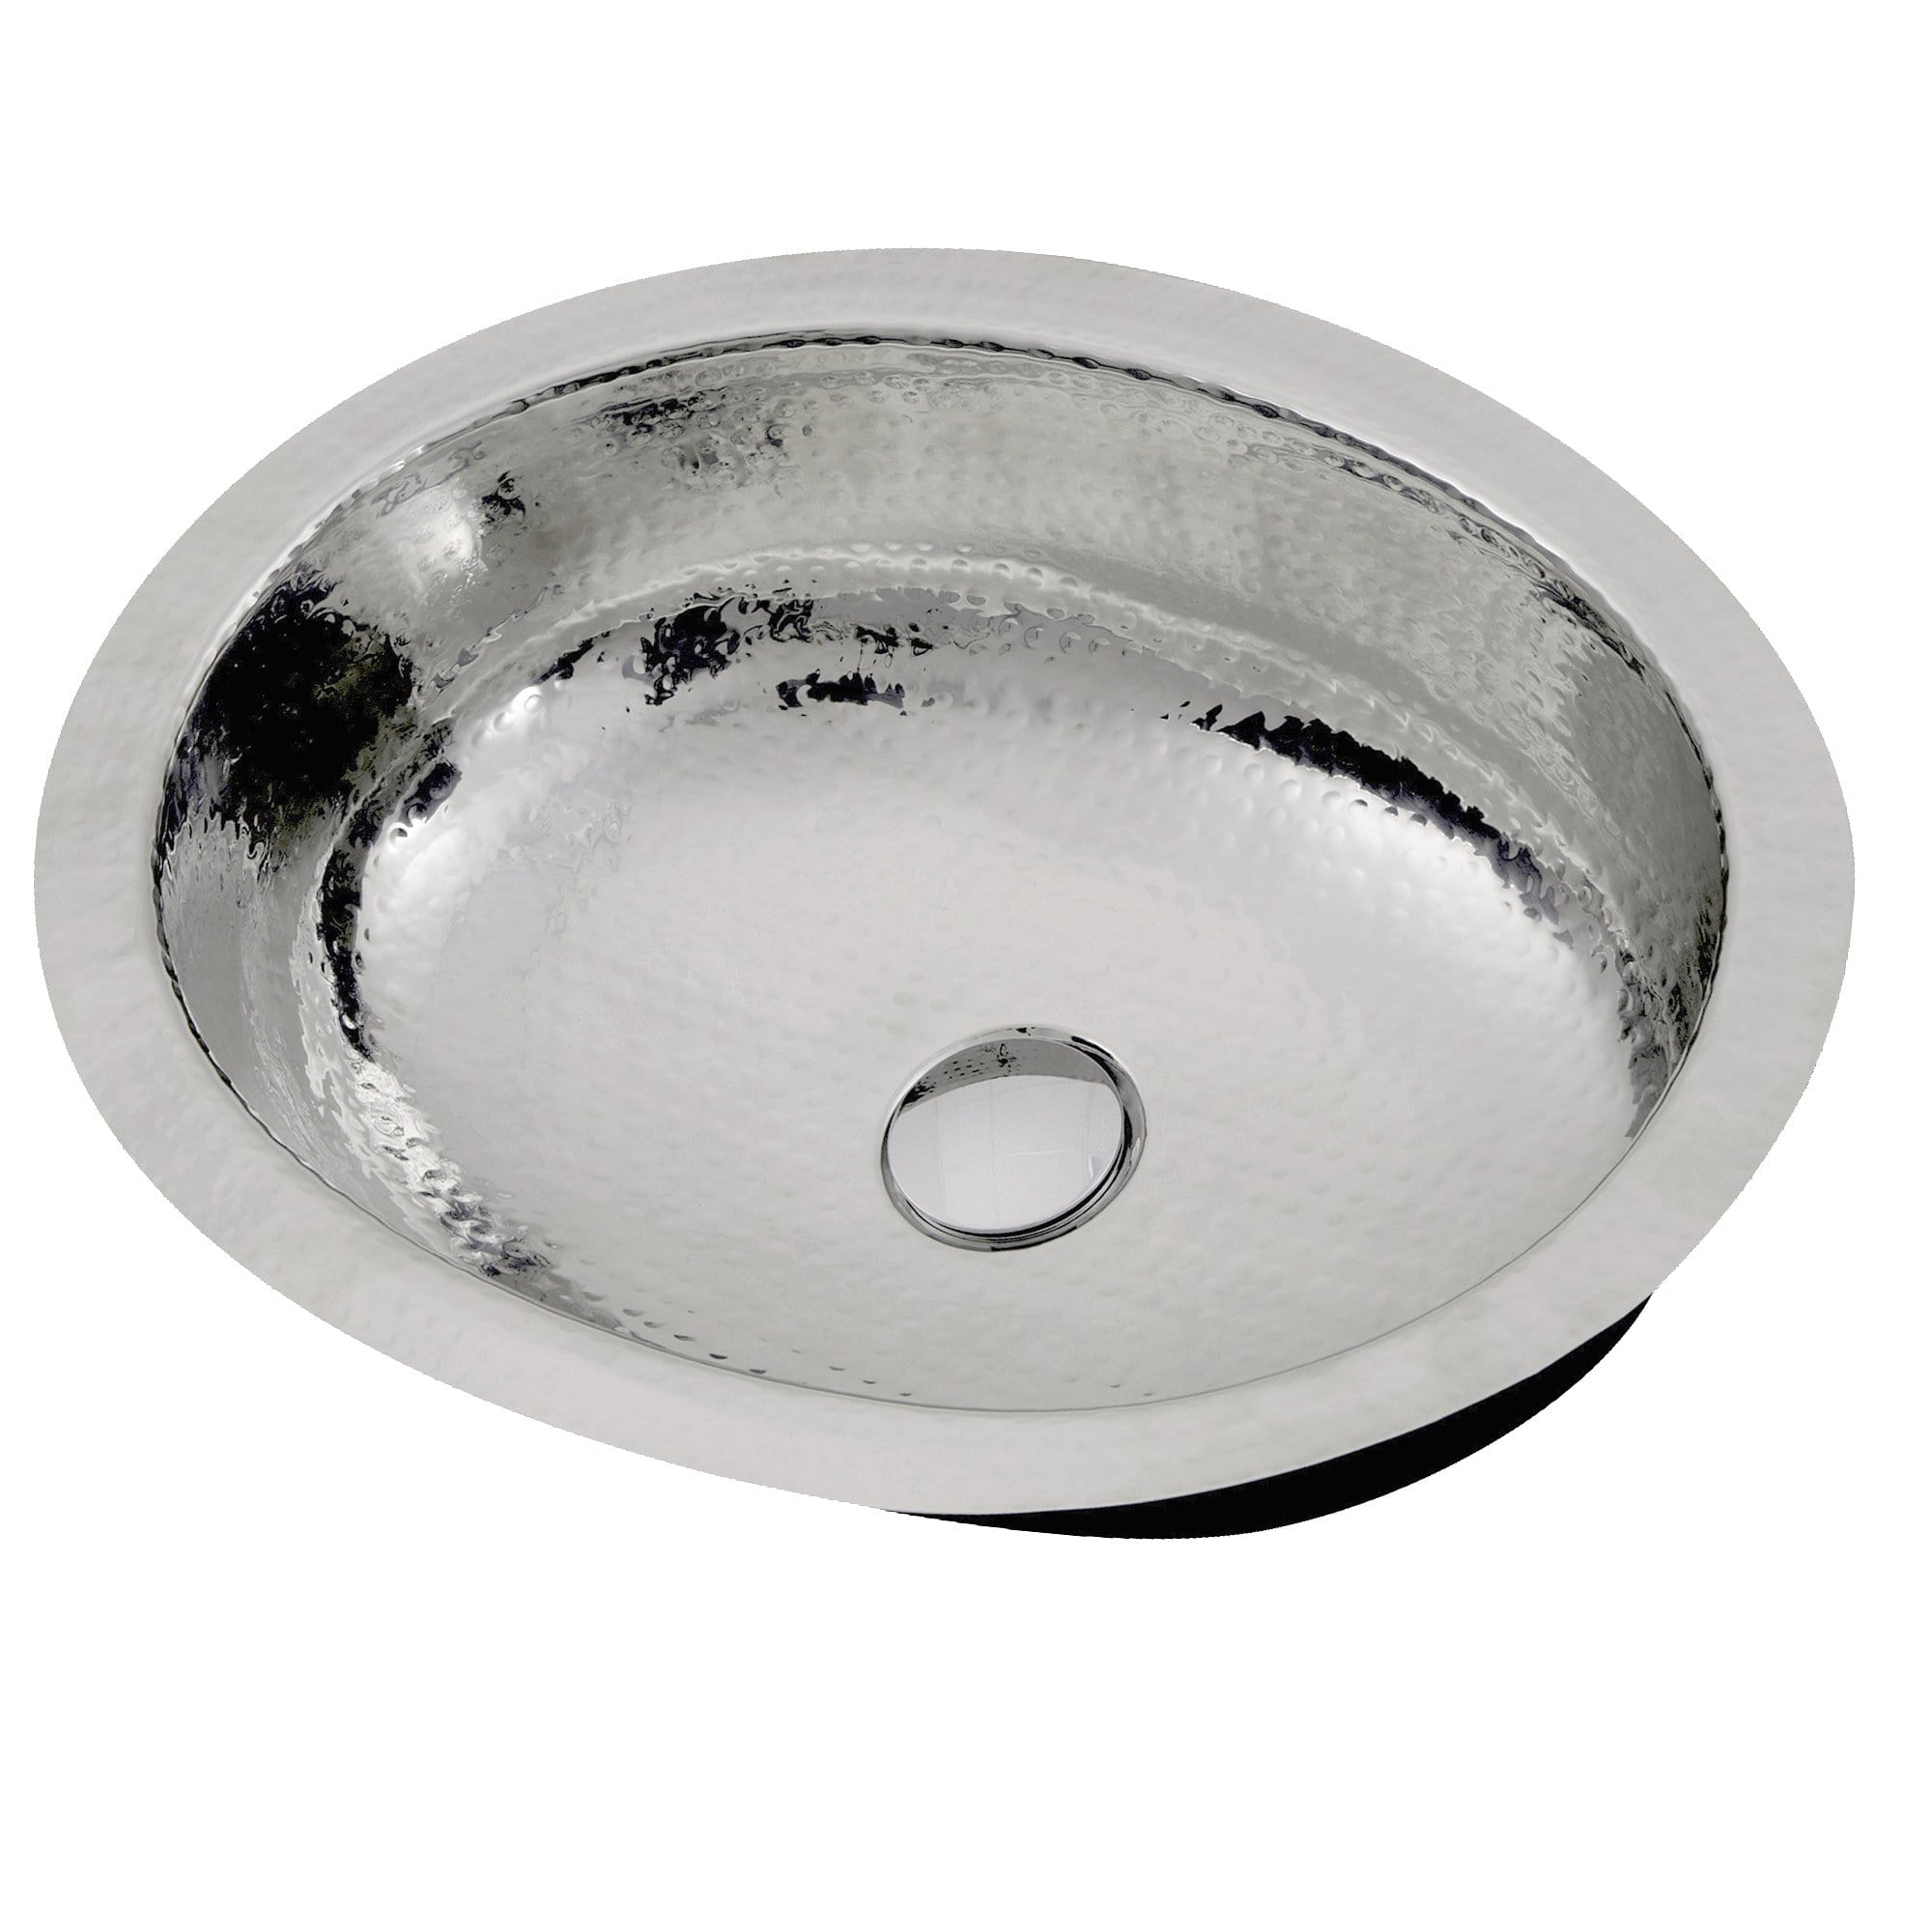 Nantucket Hand Hammered Stainless Steel Oval Undermount Bathroom Sink - OVS - Manor House Sinks